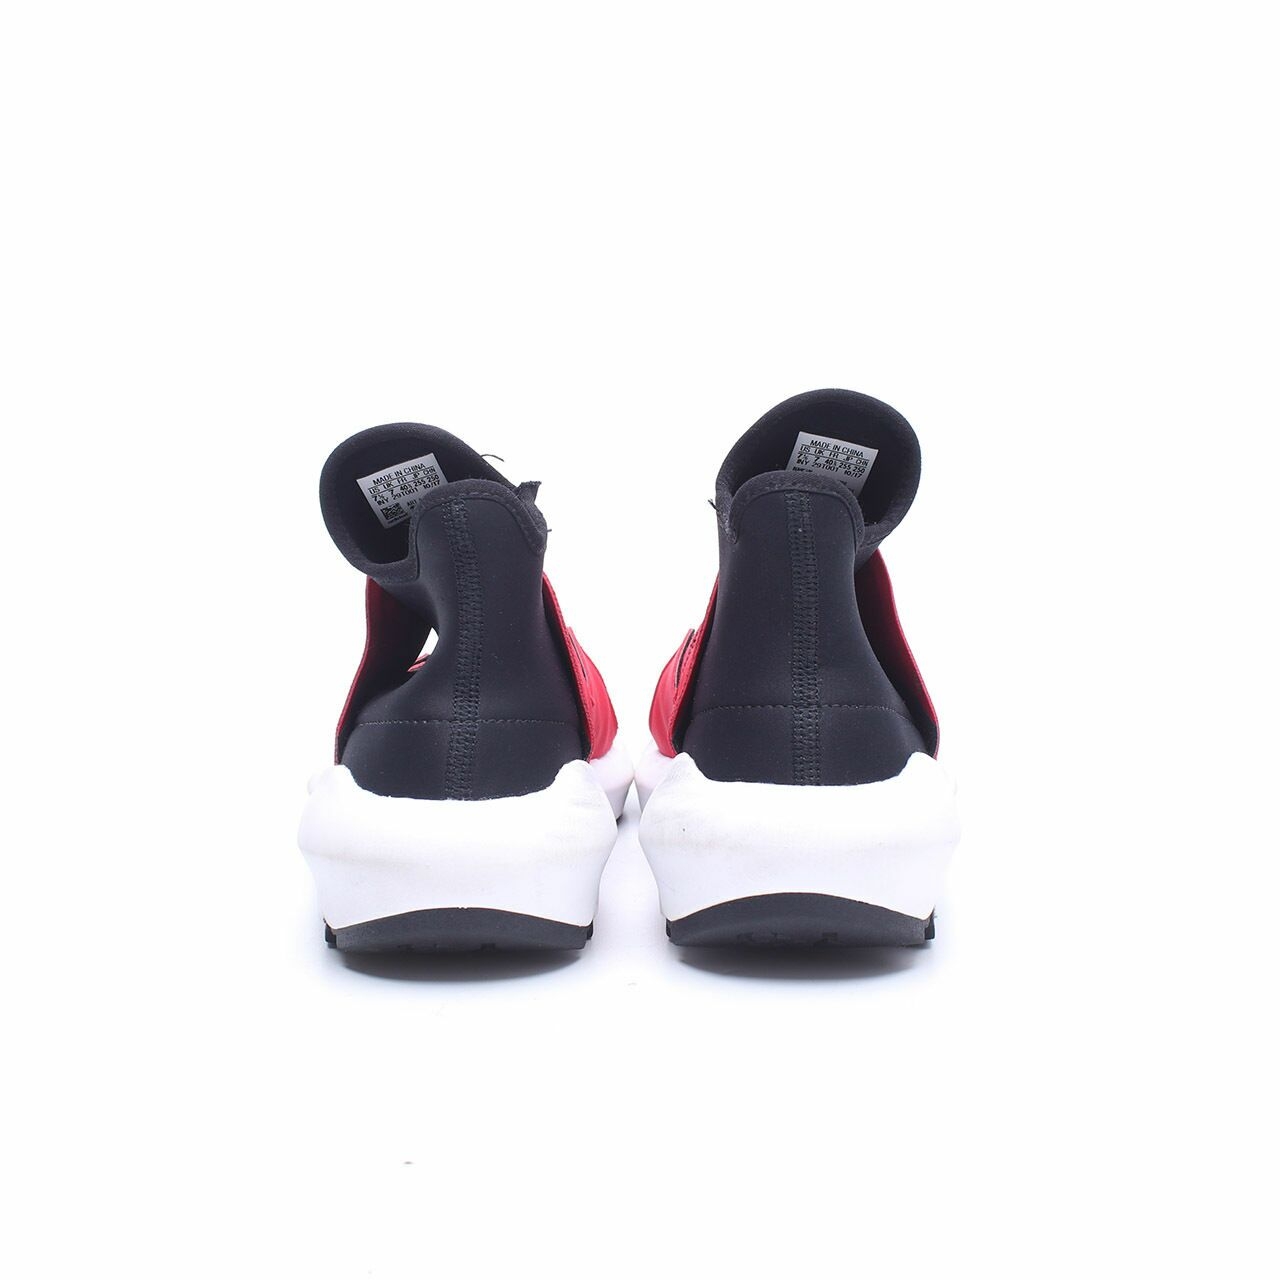 Y-3 Yohji Yamamoto x Adidas Y-3 Suberou Red & Black Sneakers